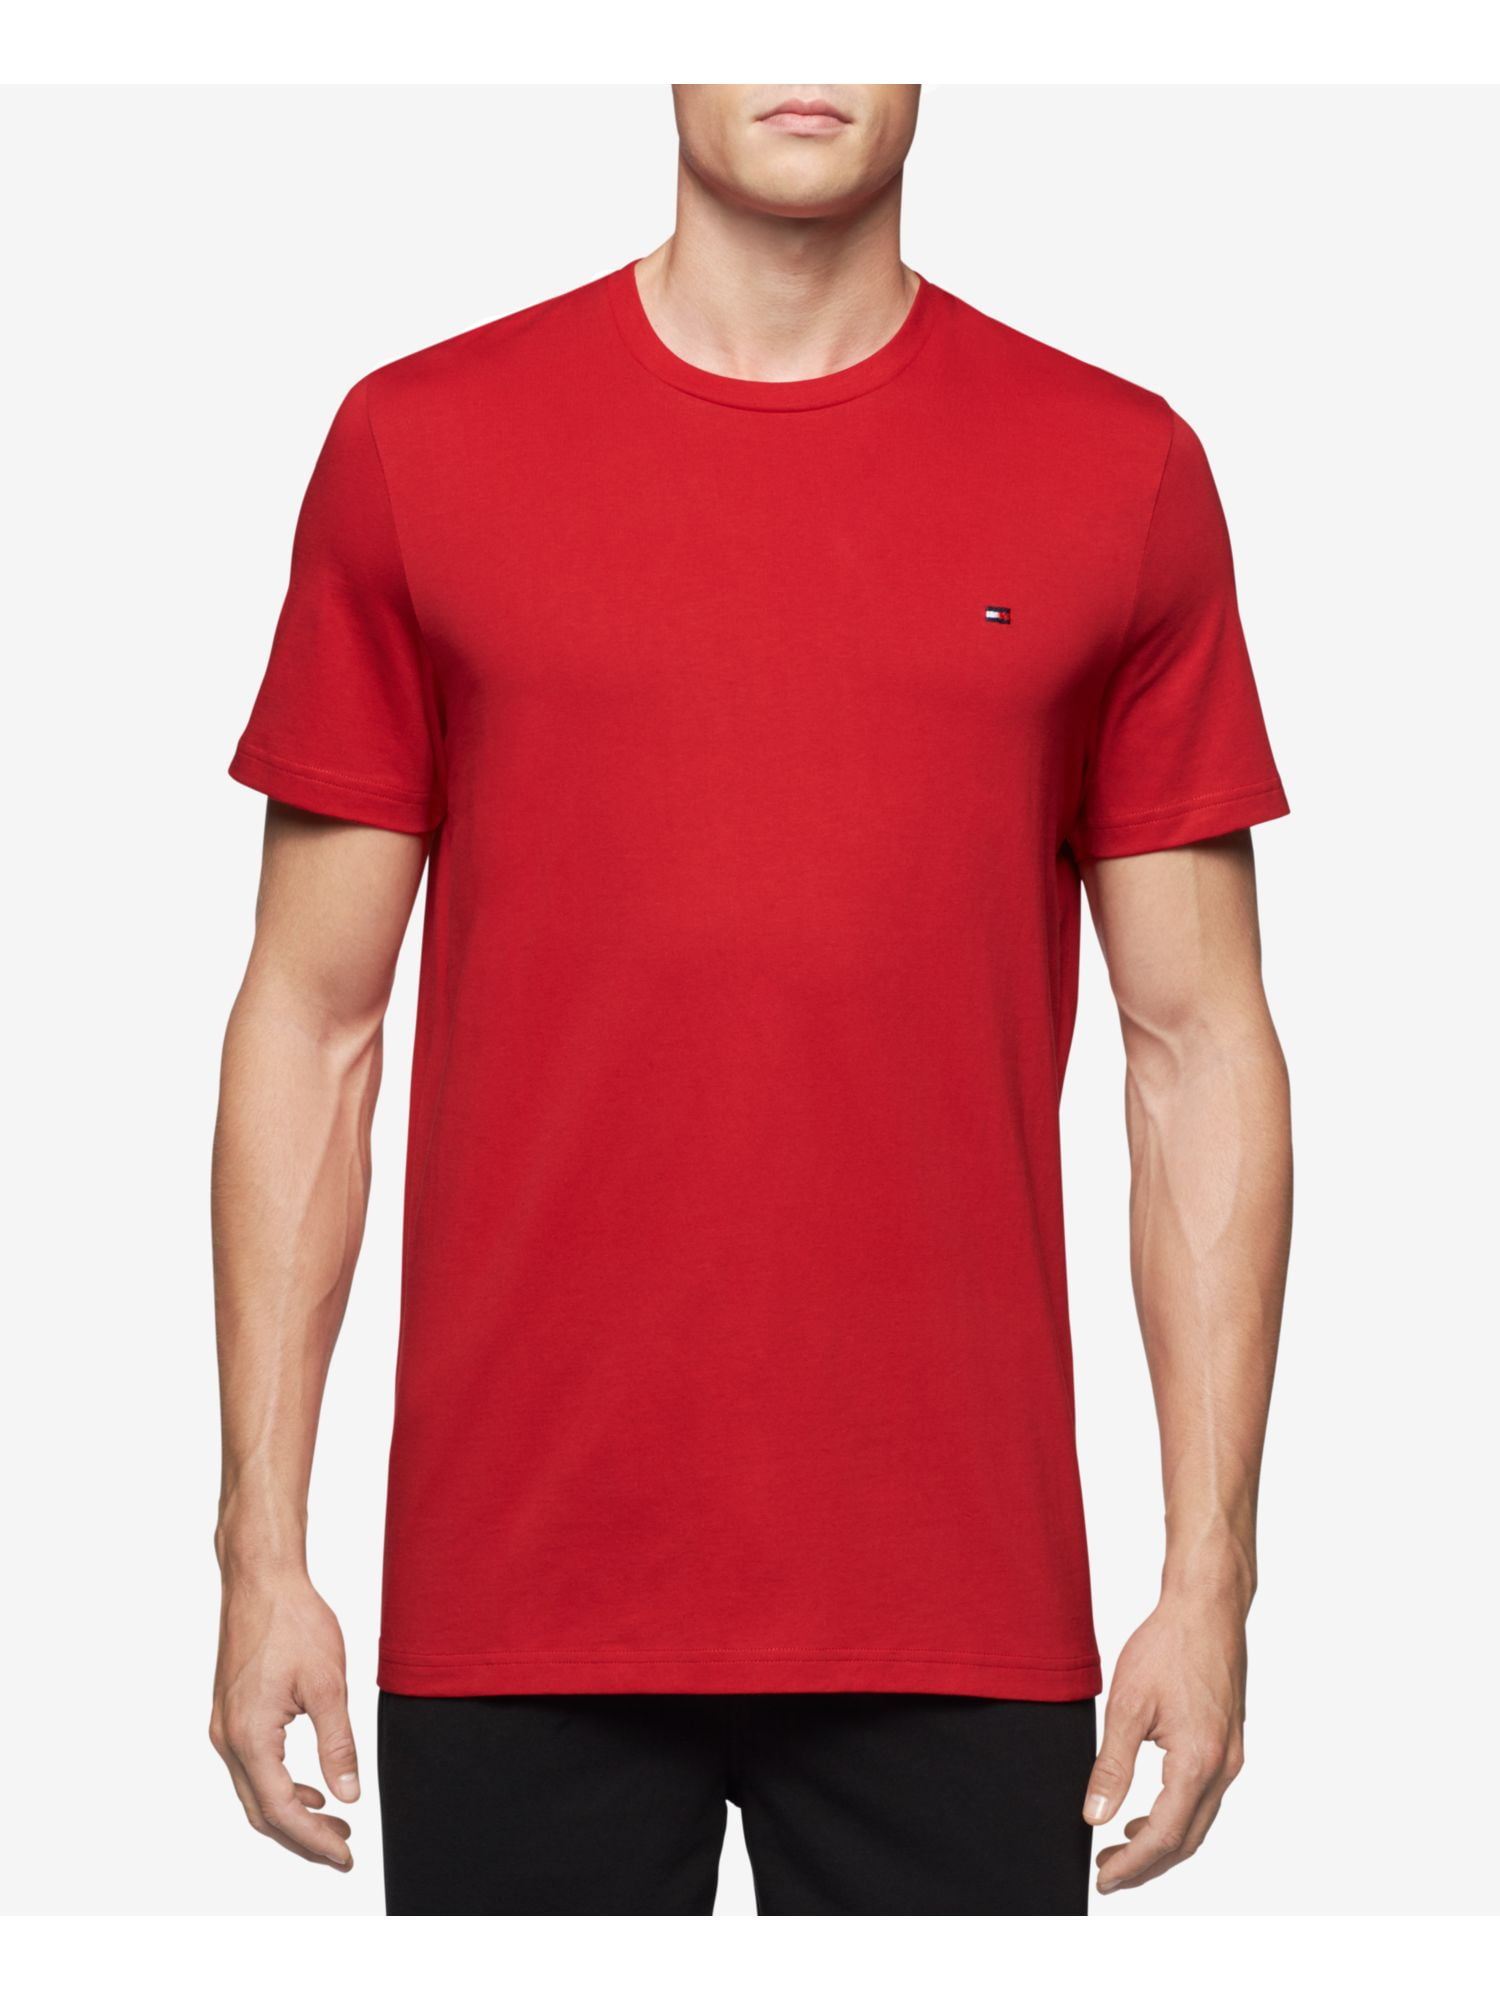 TOMMY HILFIGER Mens M Red Lightweight, Fit T-Shirt Classic